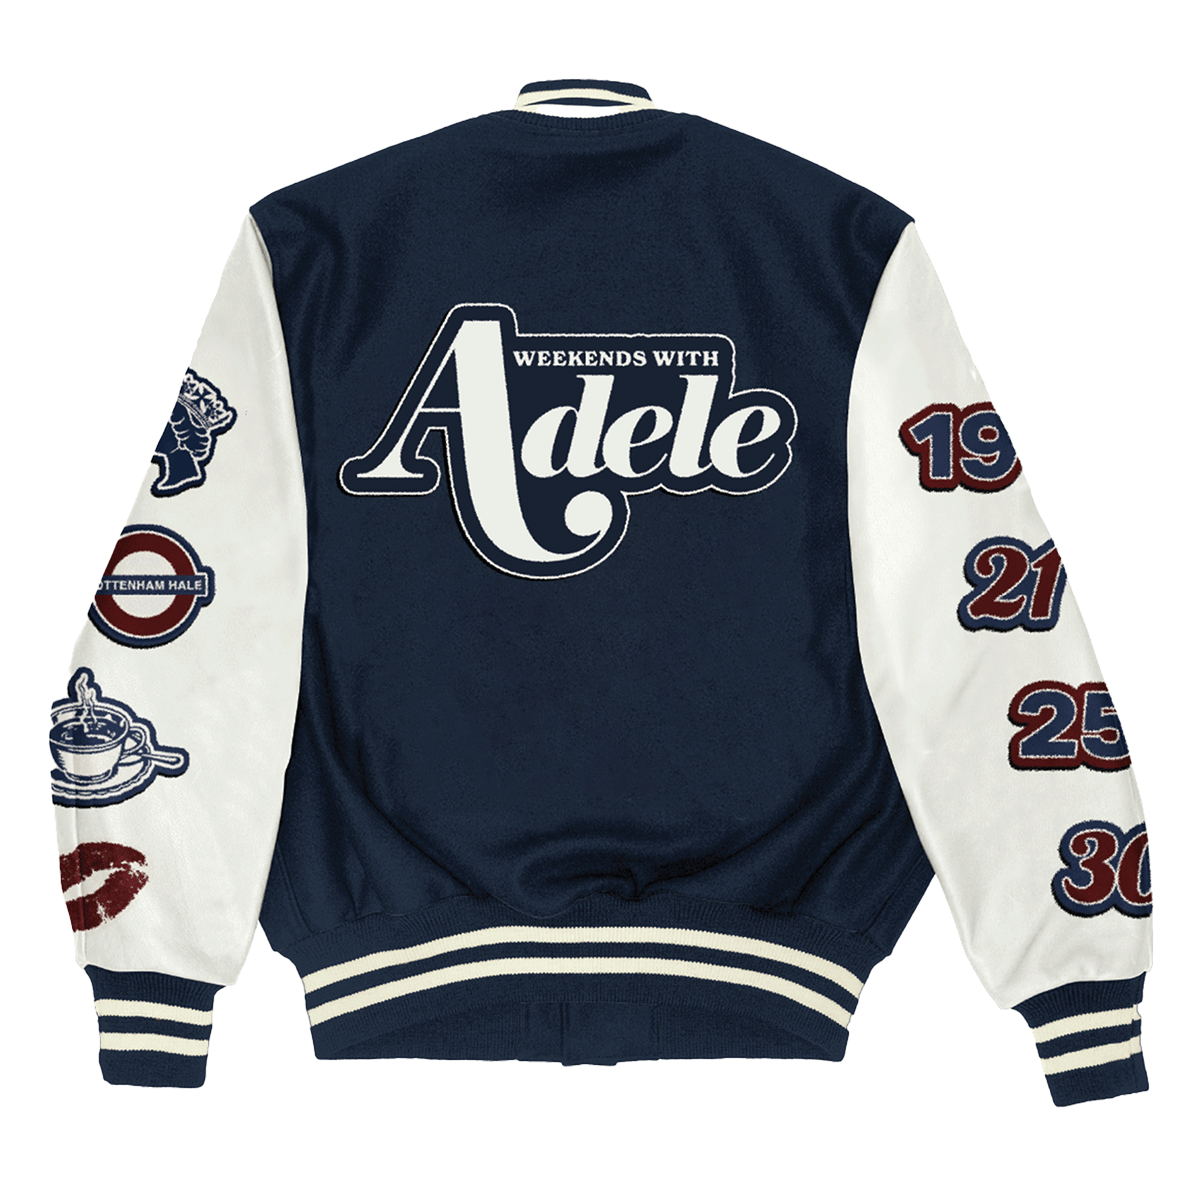 Weekends With Adele Letterman Jacket